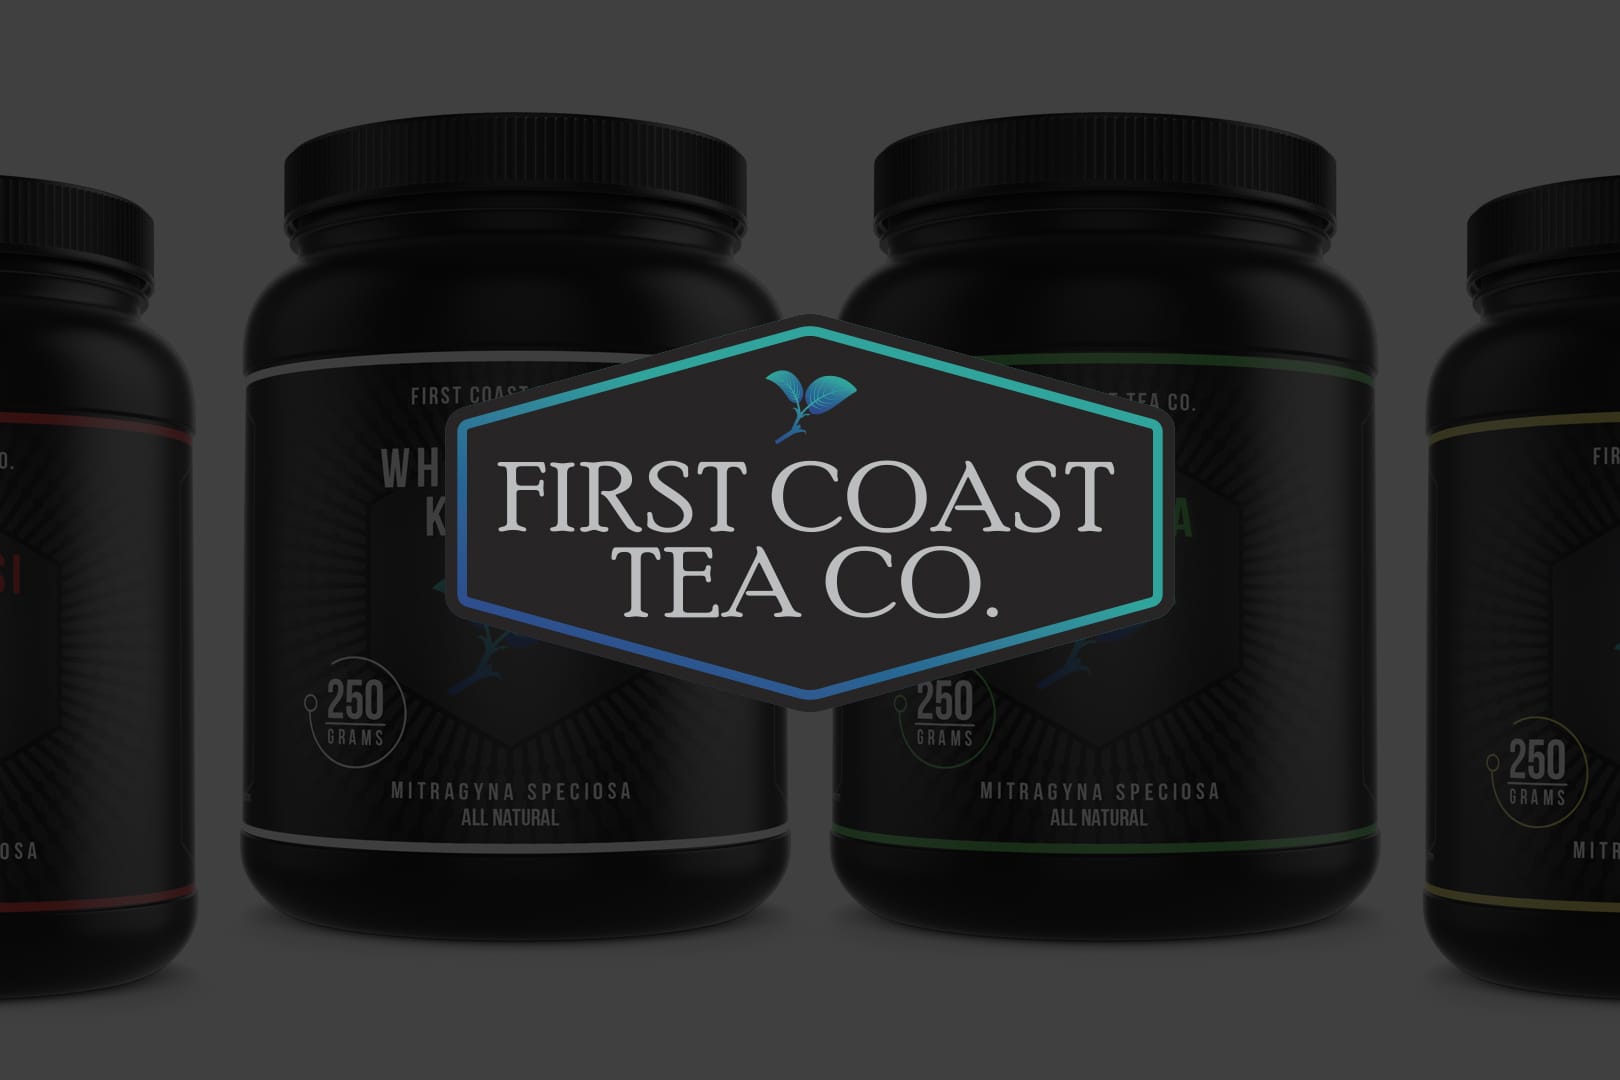 First Coast Tea Co